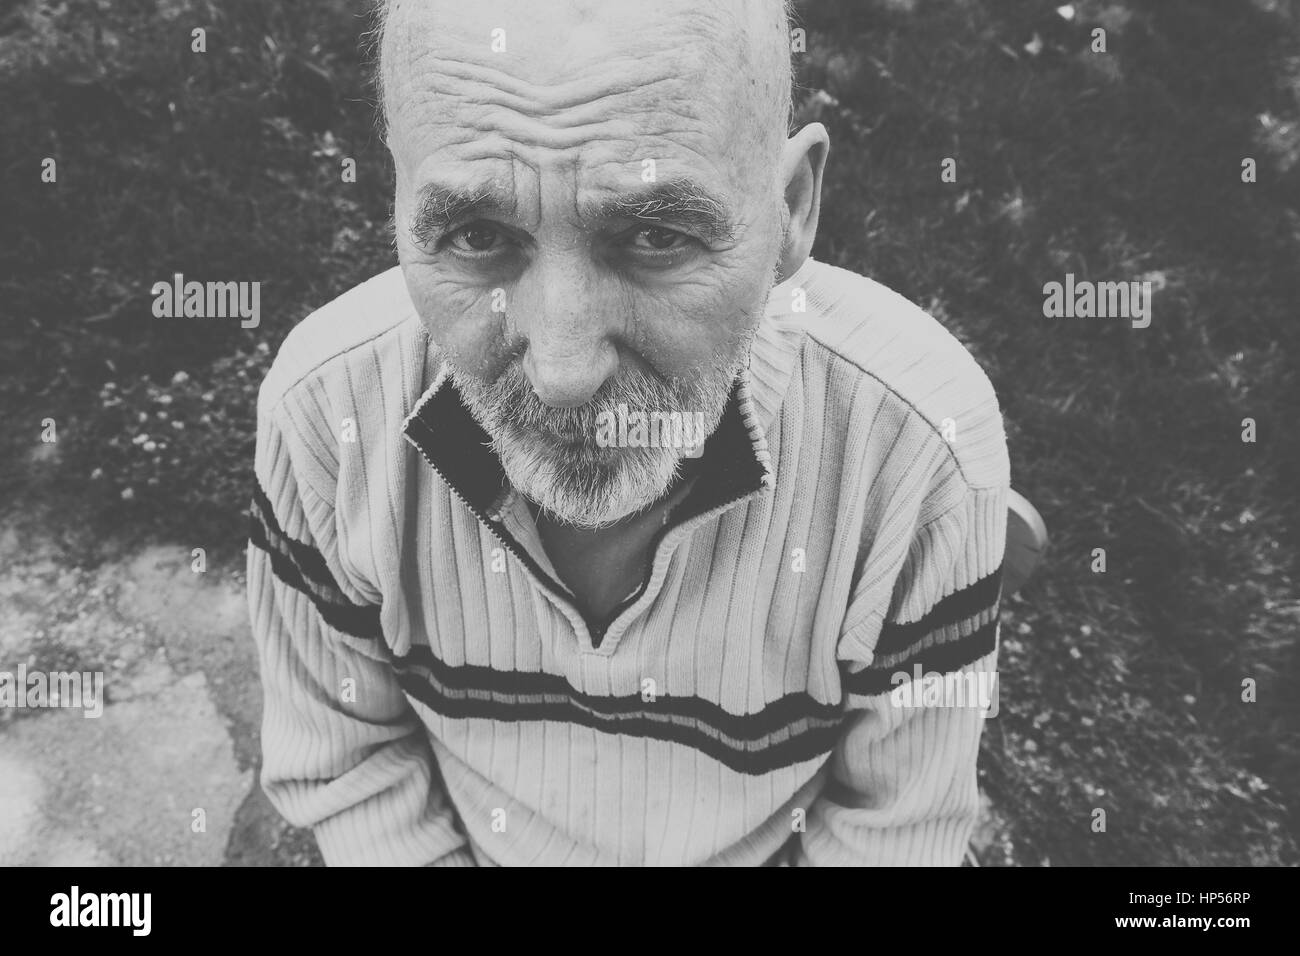 Old senior man Stock Photo